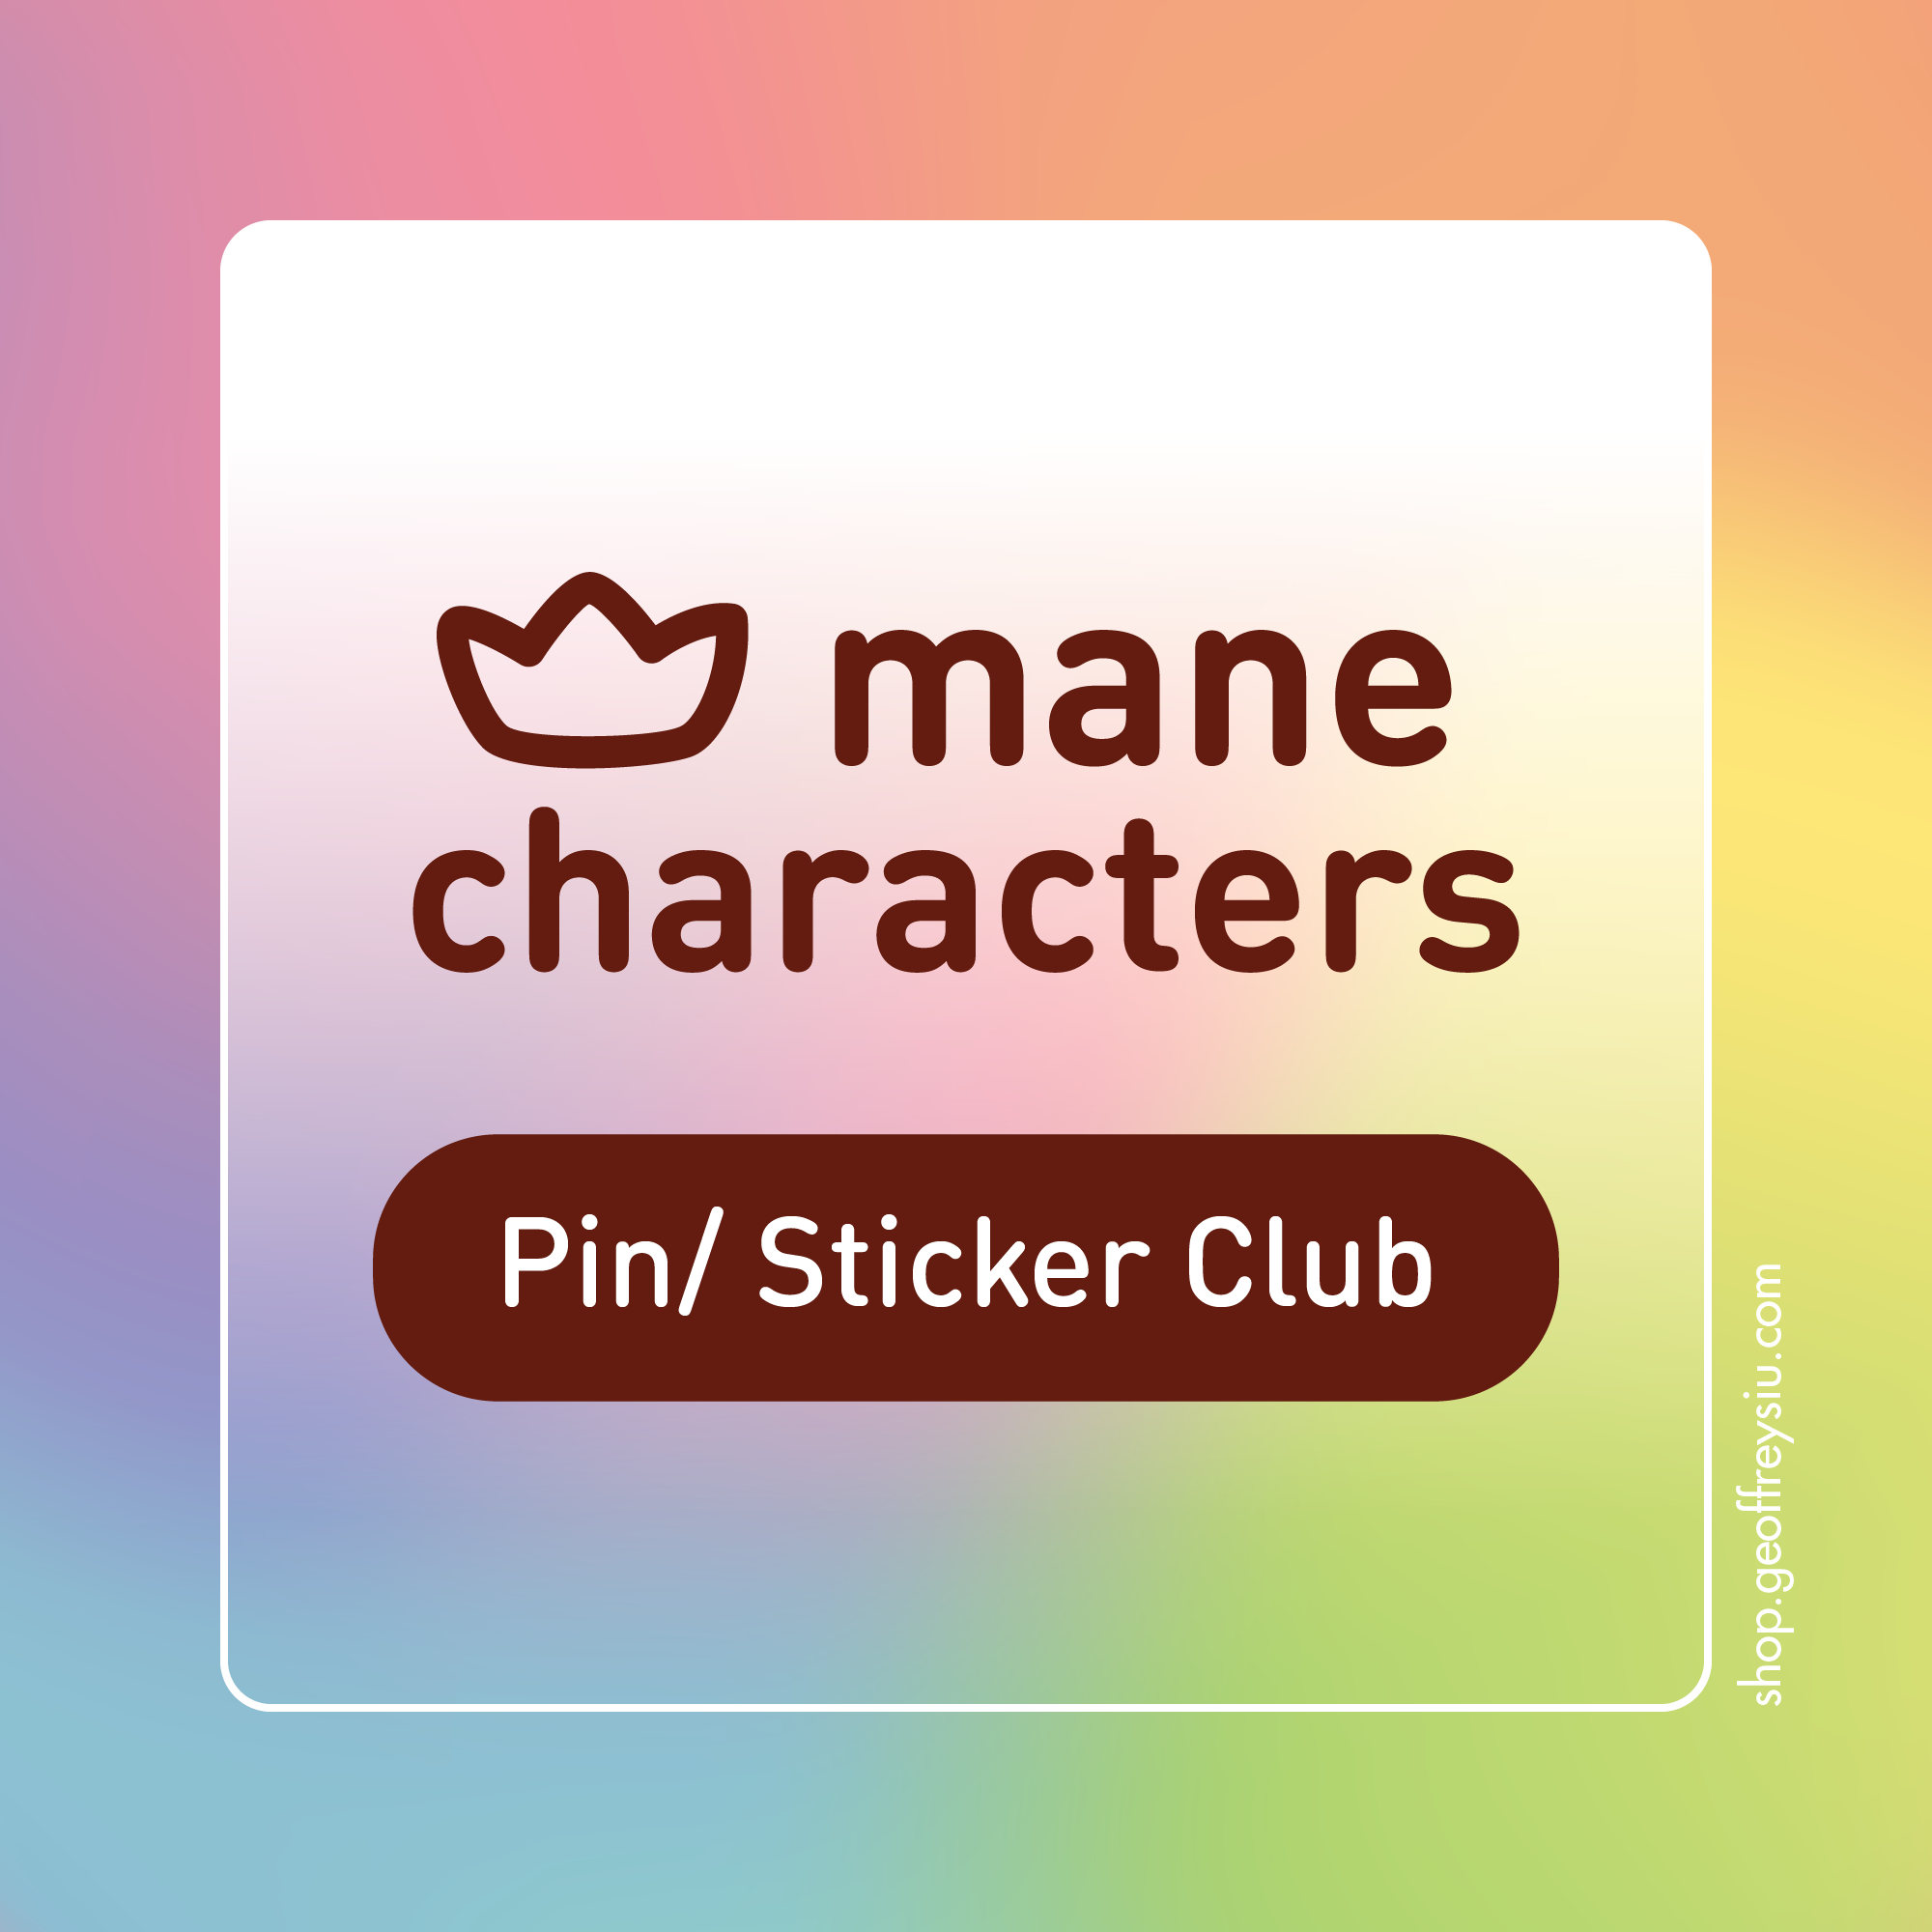 Mane Characters Pin/ Sticker Club